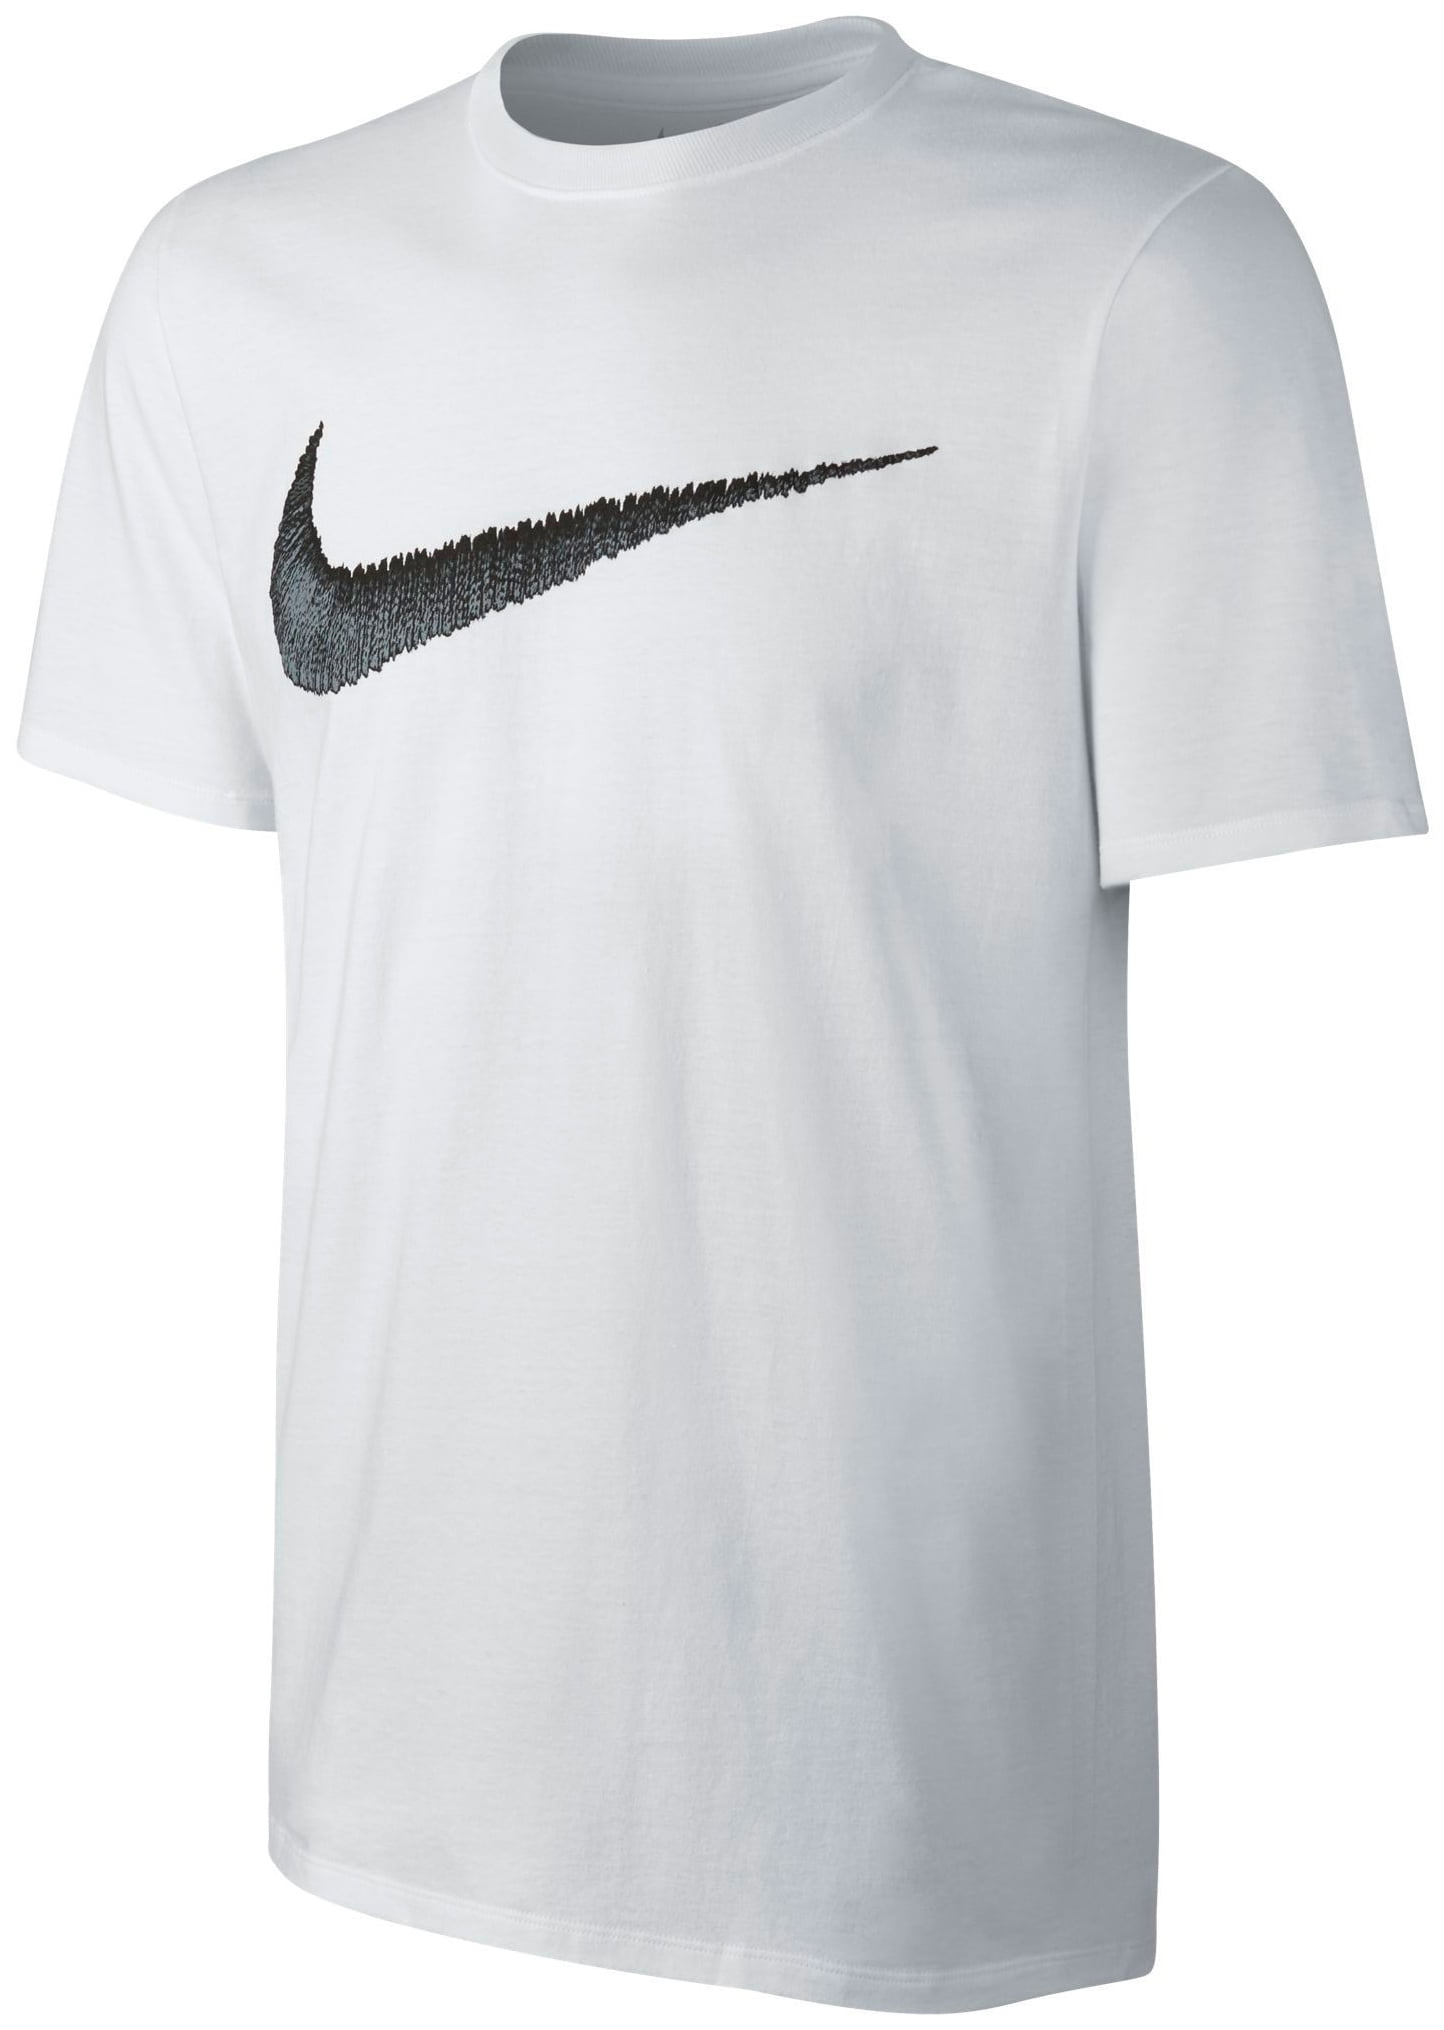 Nike Men's Hangtag Swoosh Graphic T-Shirt - White/Black - Size M ...